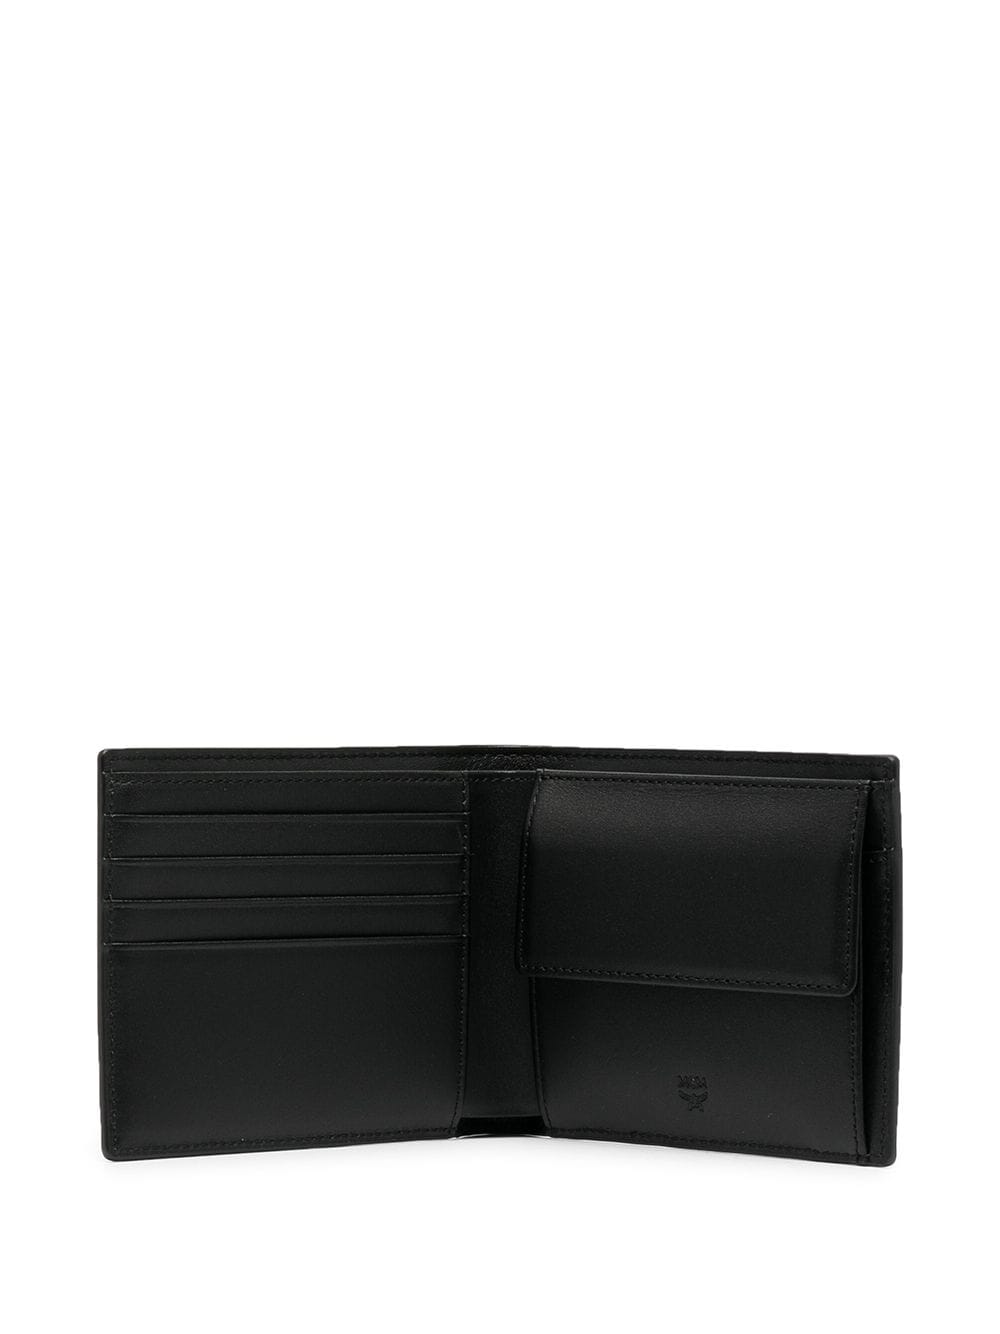 MCM Logo Printed Short Wallet Black in Leather - US